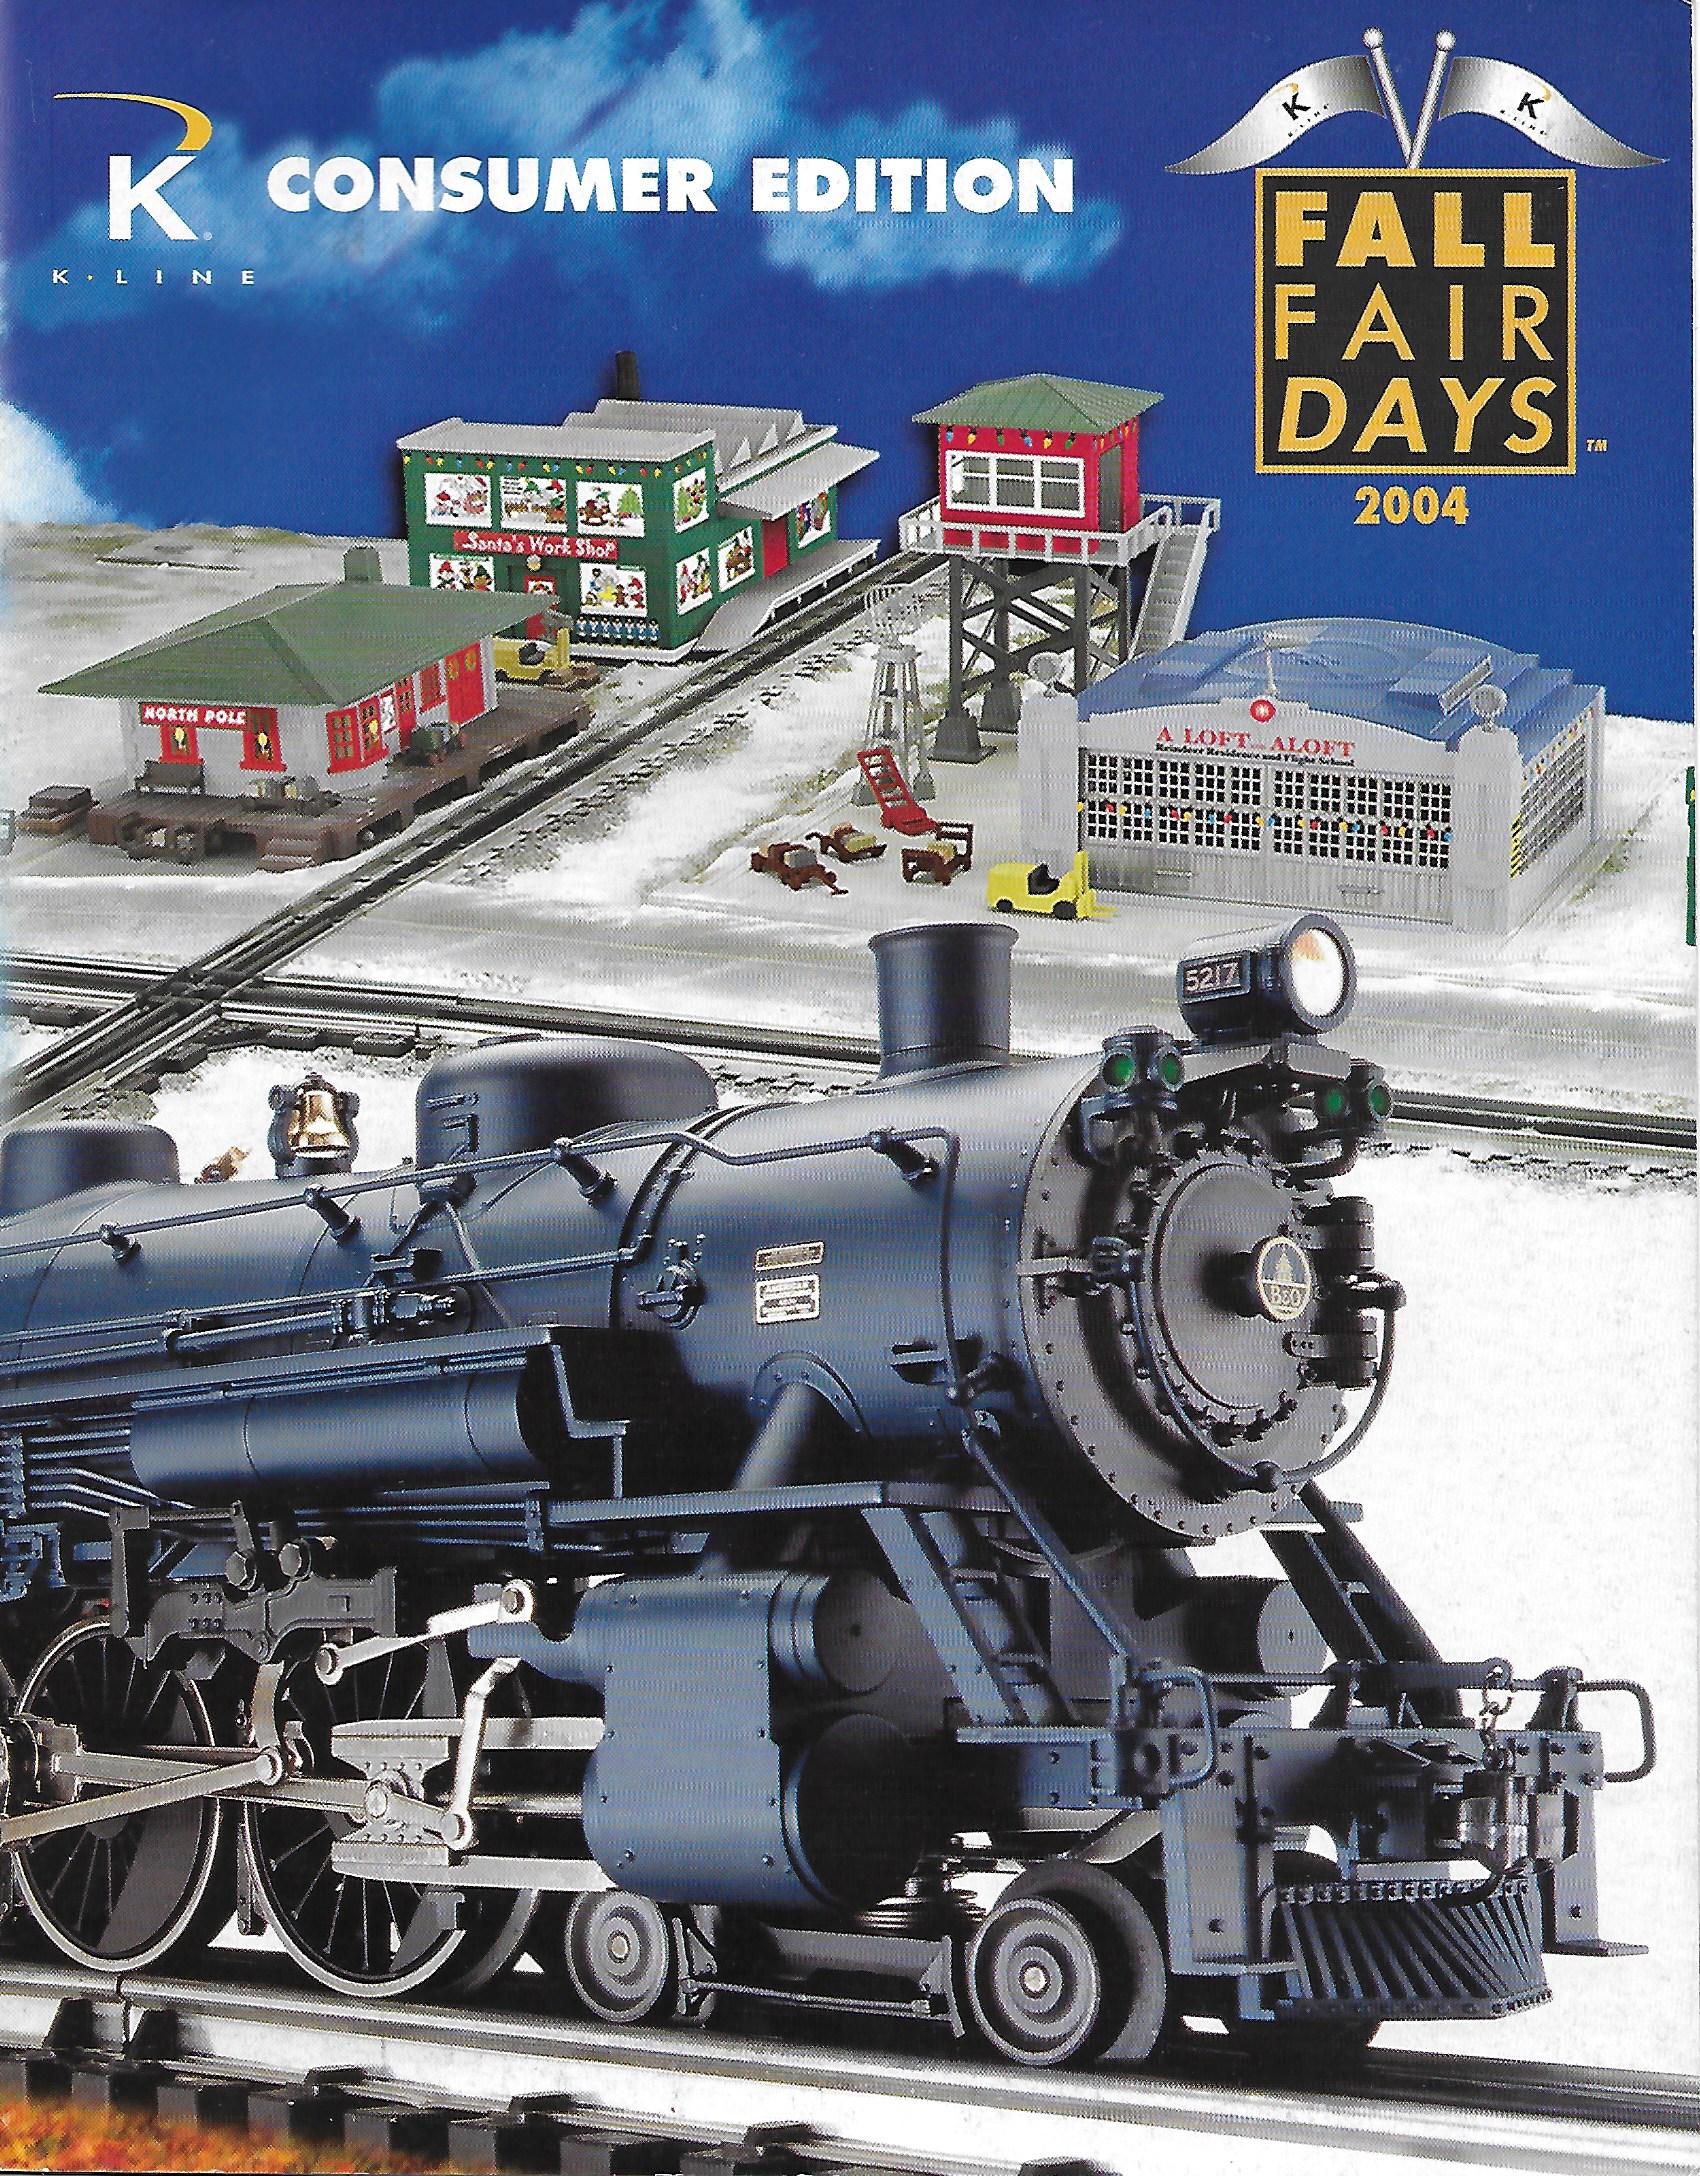 K-Line 2004 Fall Fair Days Consumer Edition Catalog image